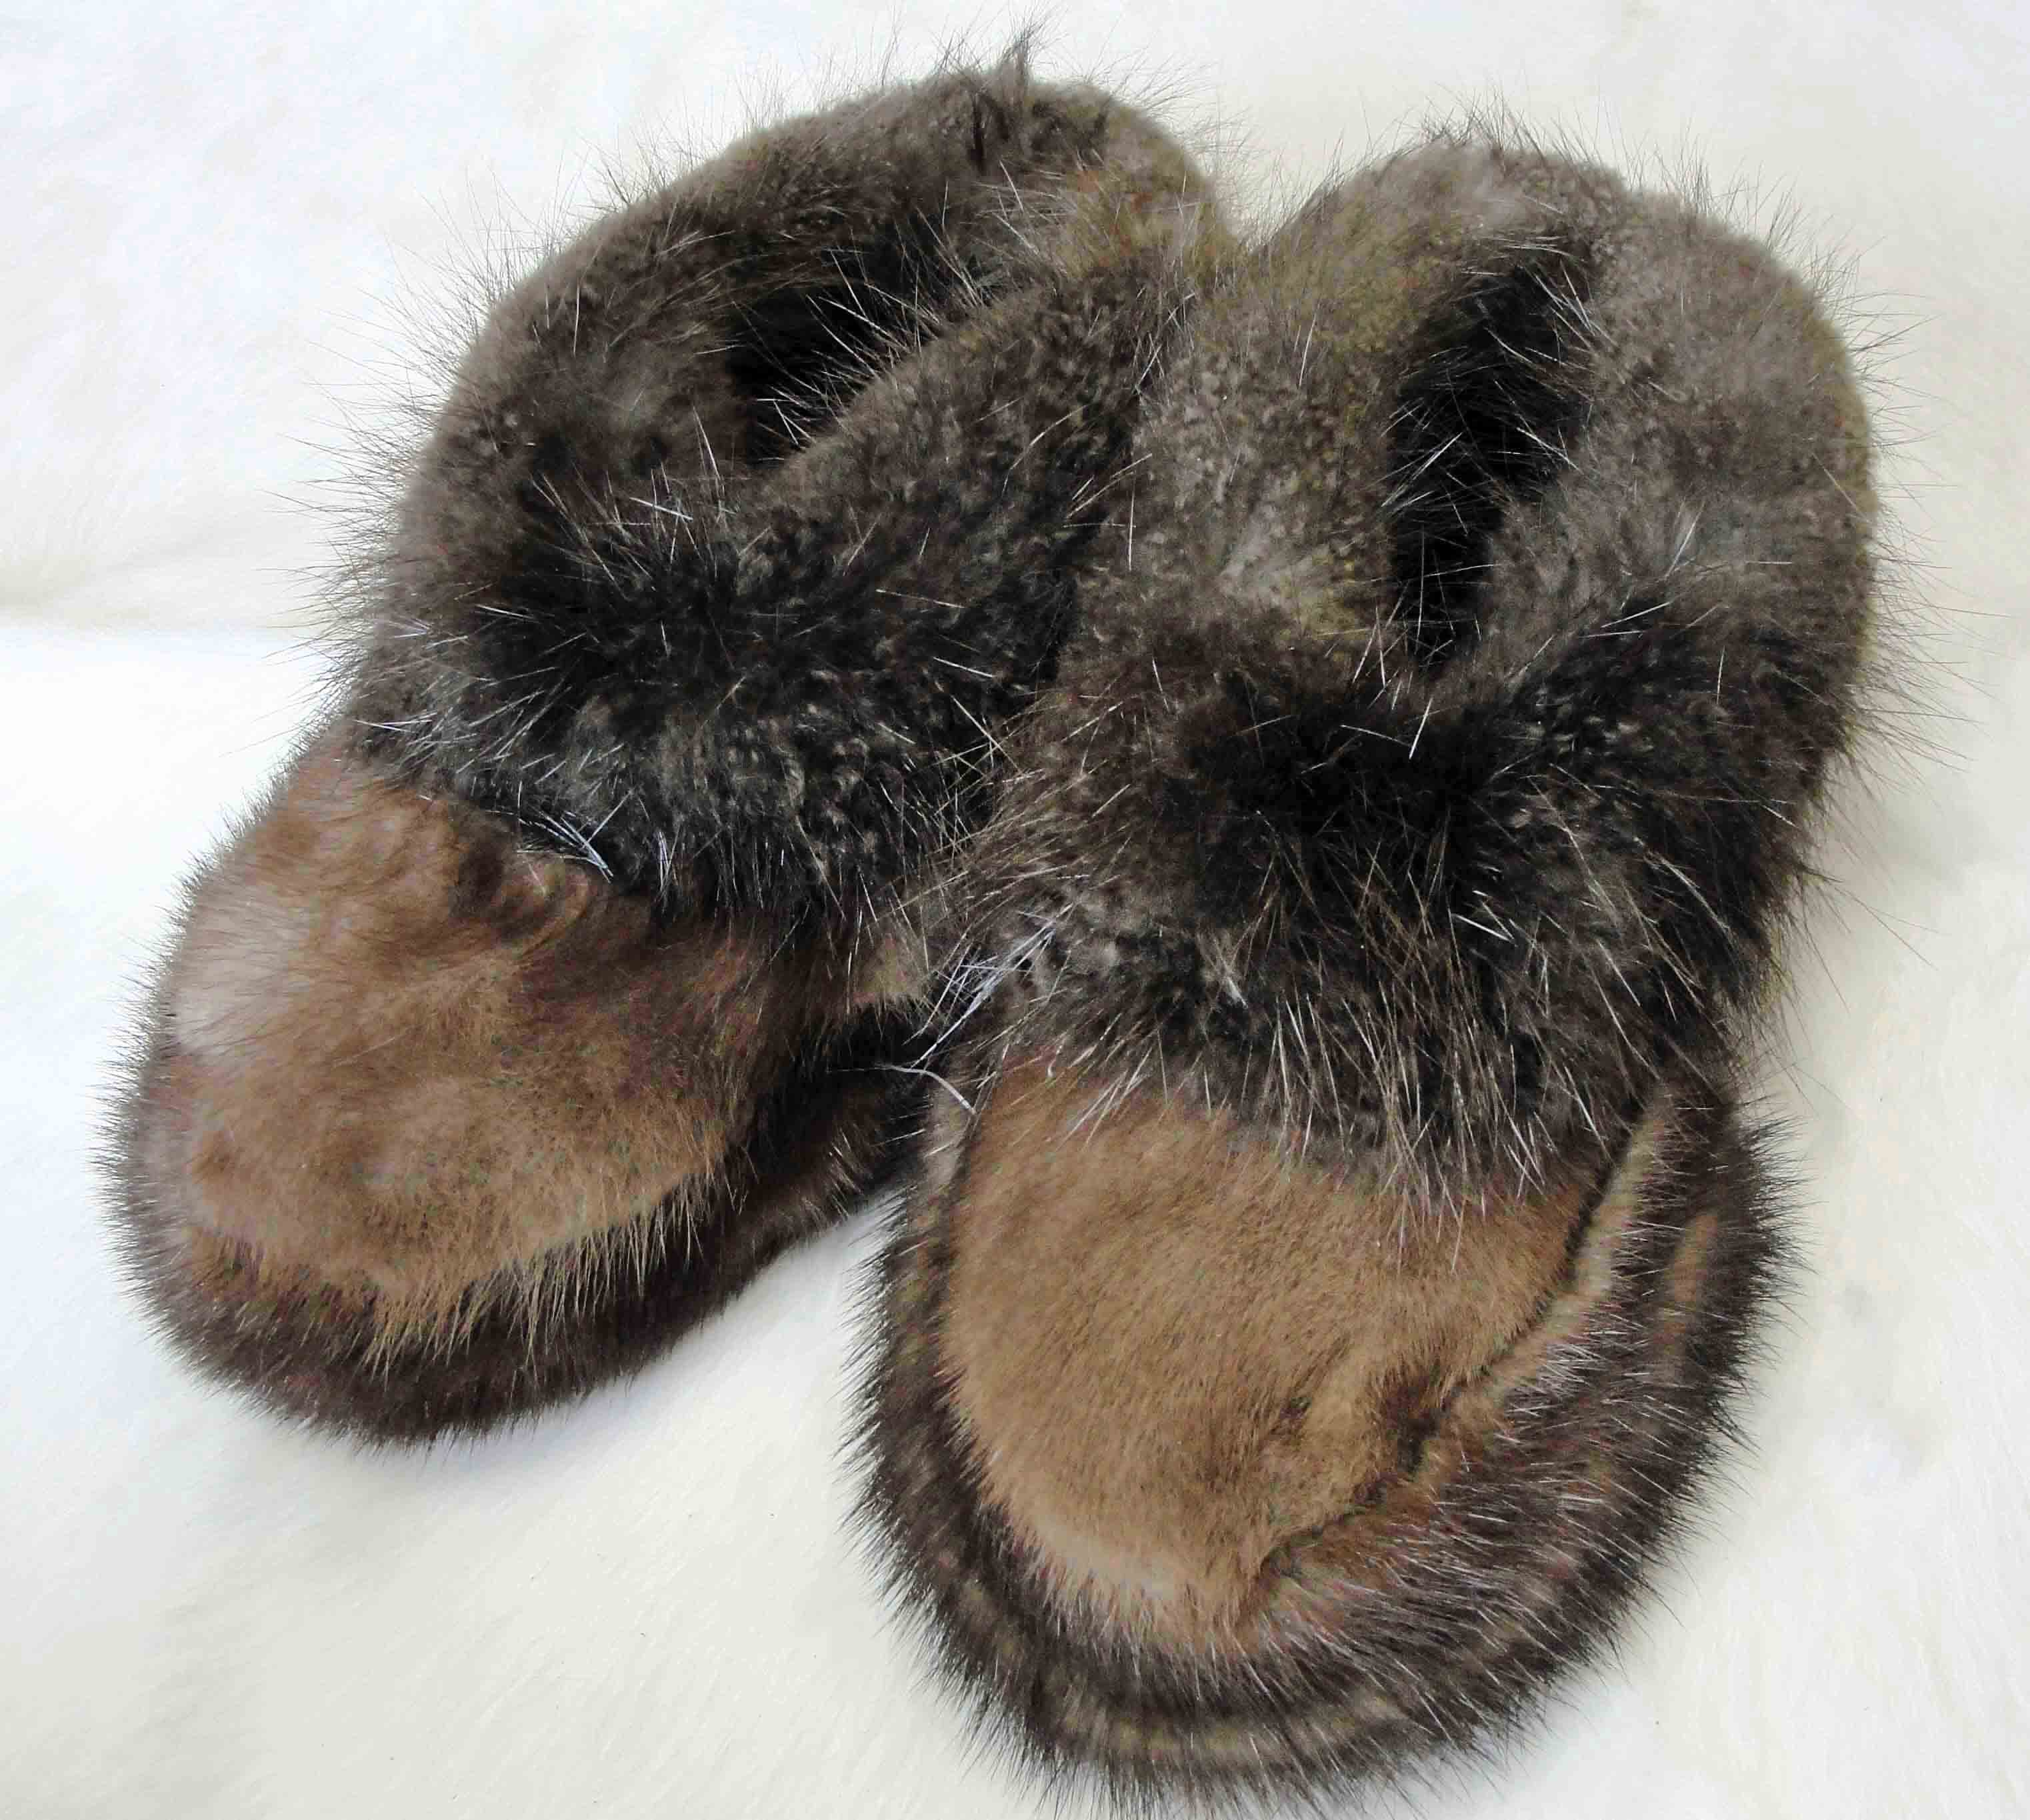 Fur Exchange - Unique Alaska Gifts and Keepsakes -